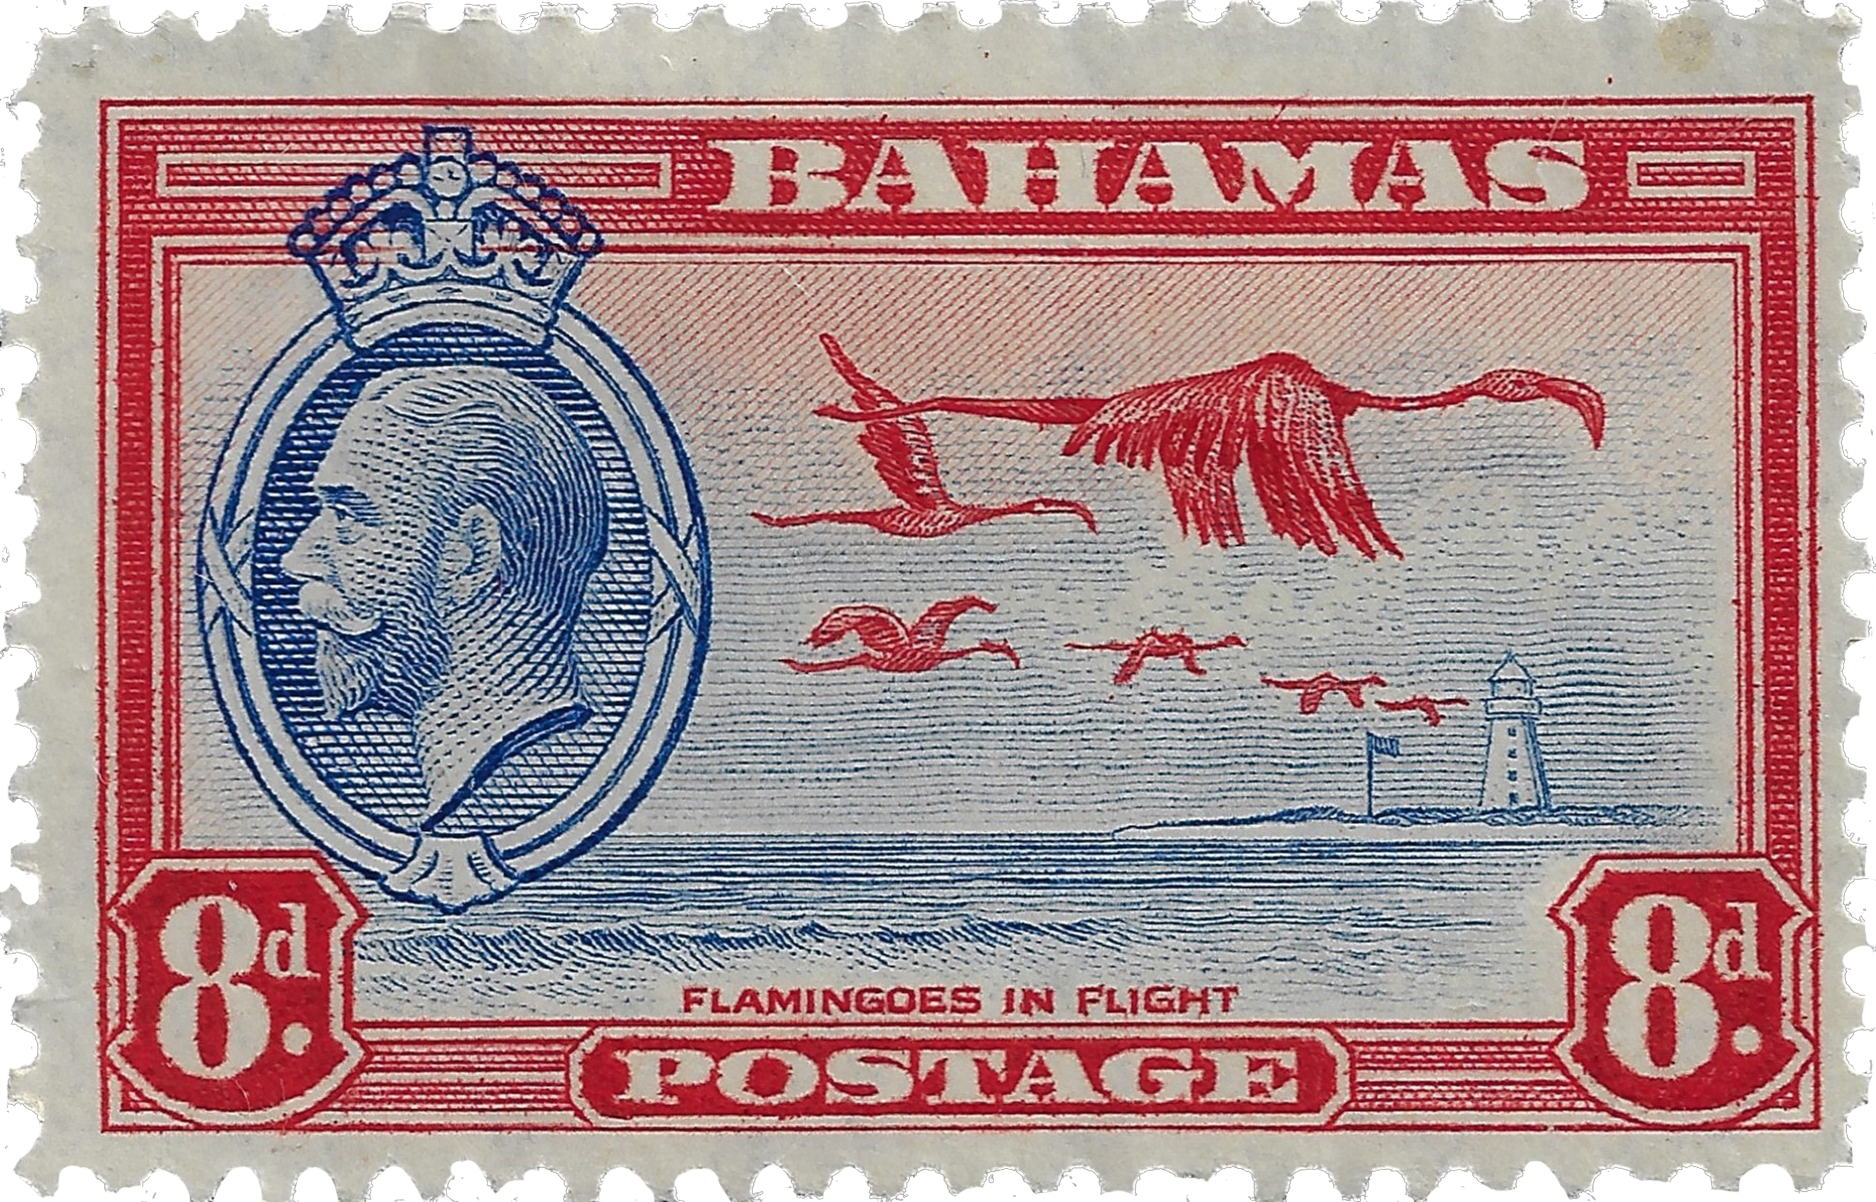 8d 1935, Flamingoes in Flight